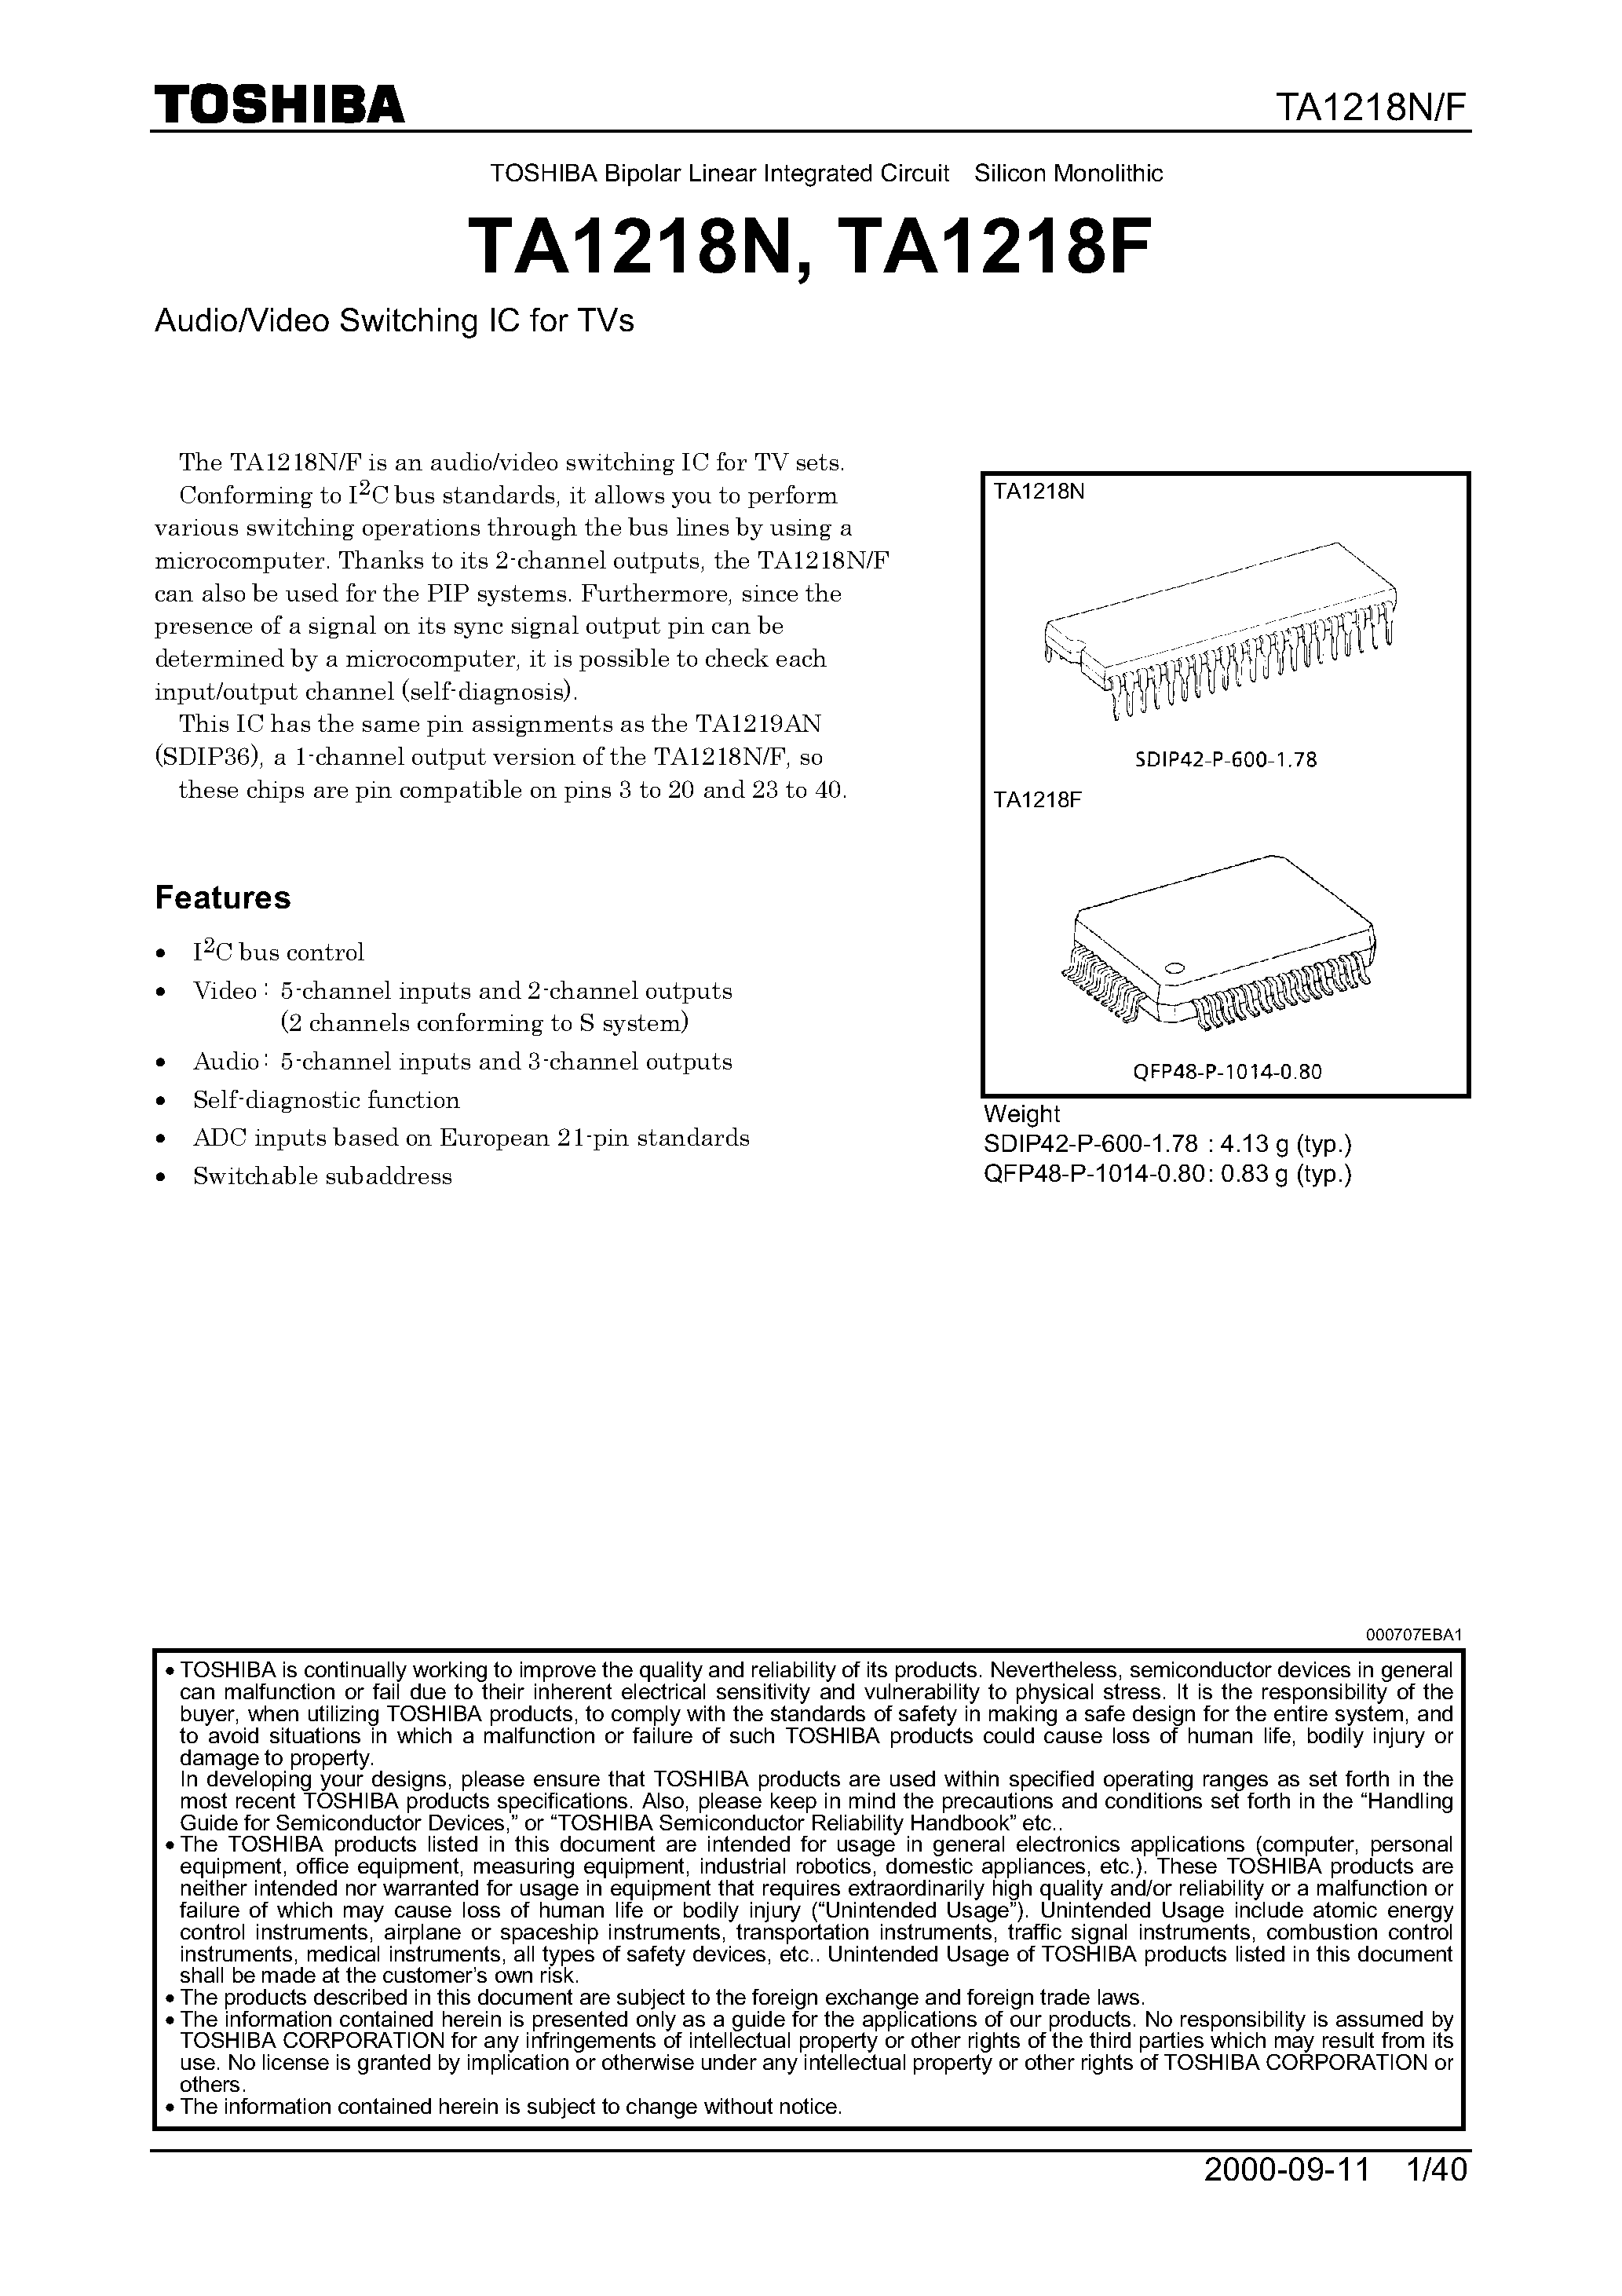 Даташит TA1218 - TOSHIBA Bipolar Linear Integrated Circuit Silicon Monolithic страница 1